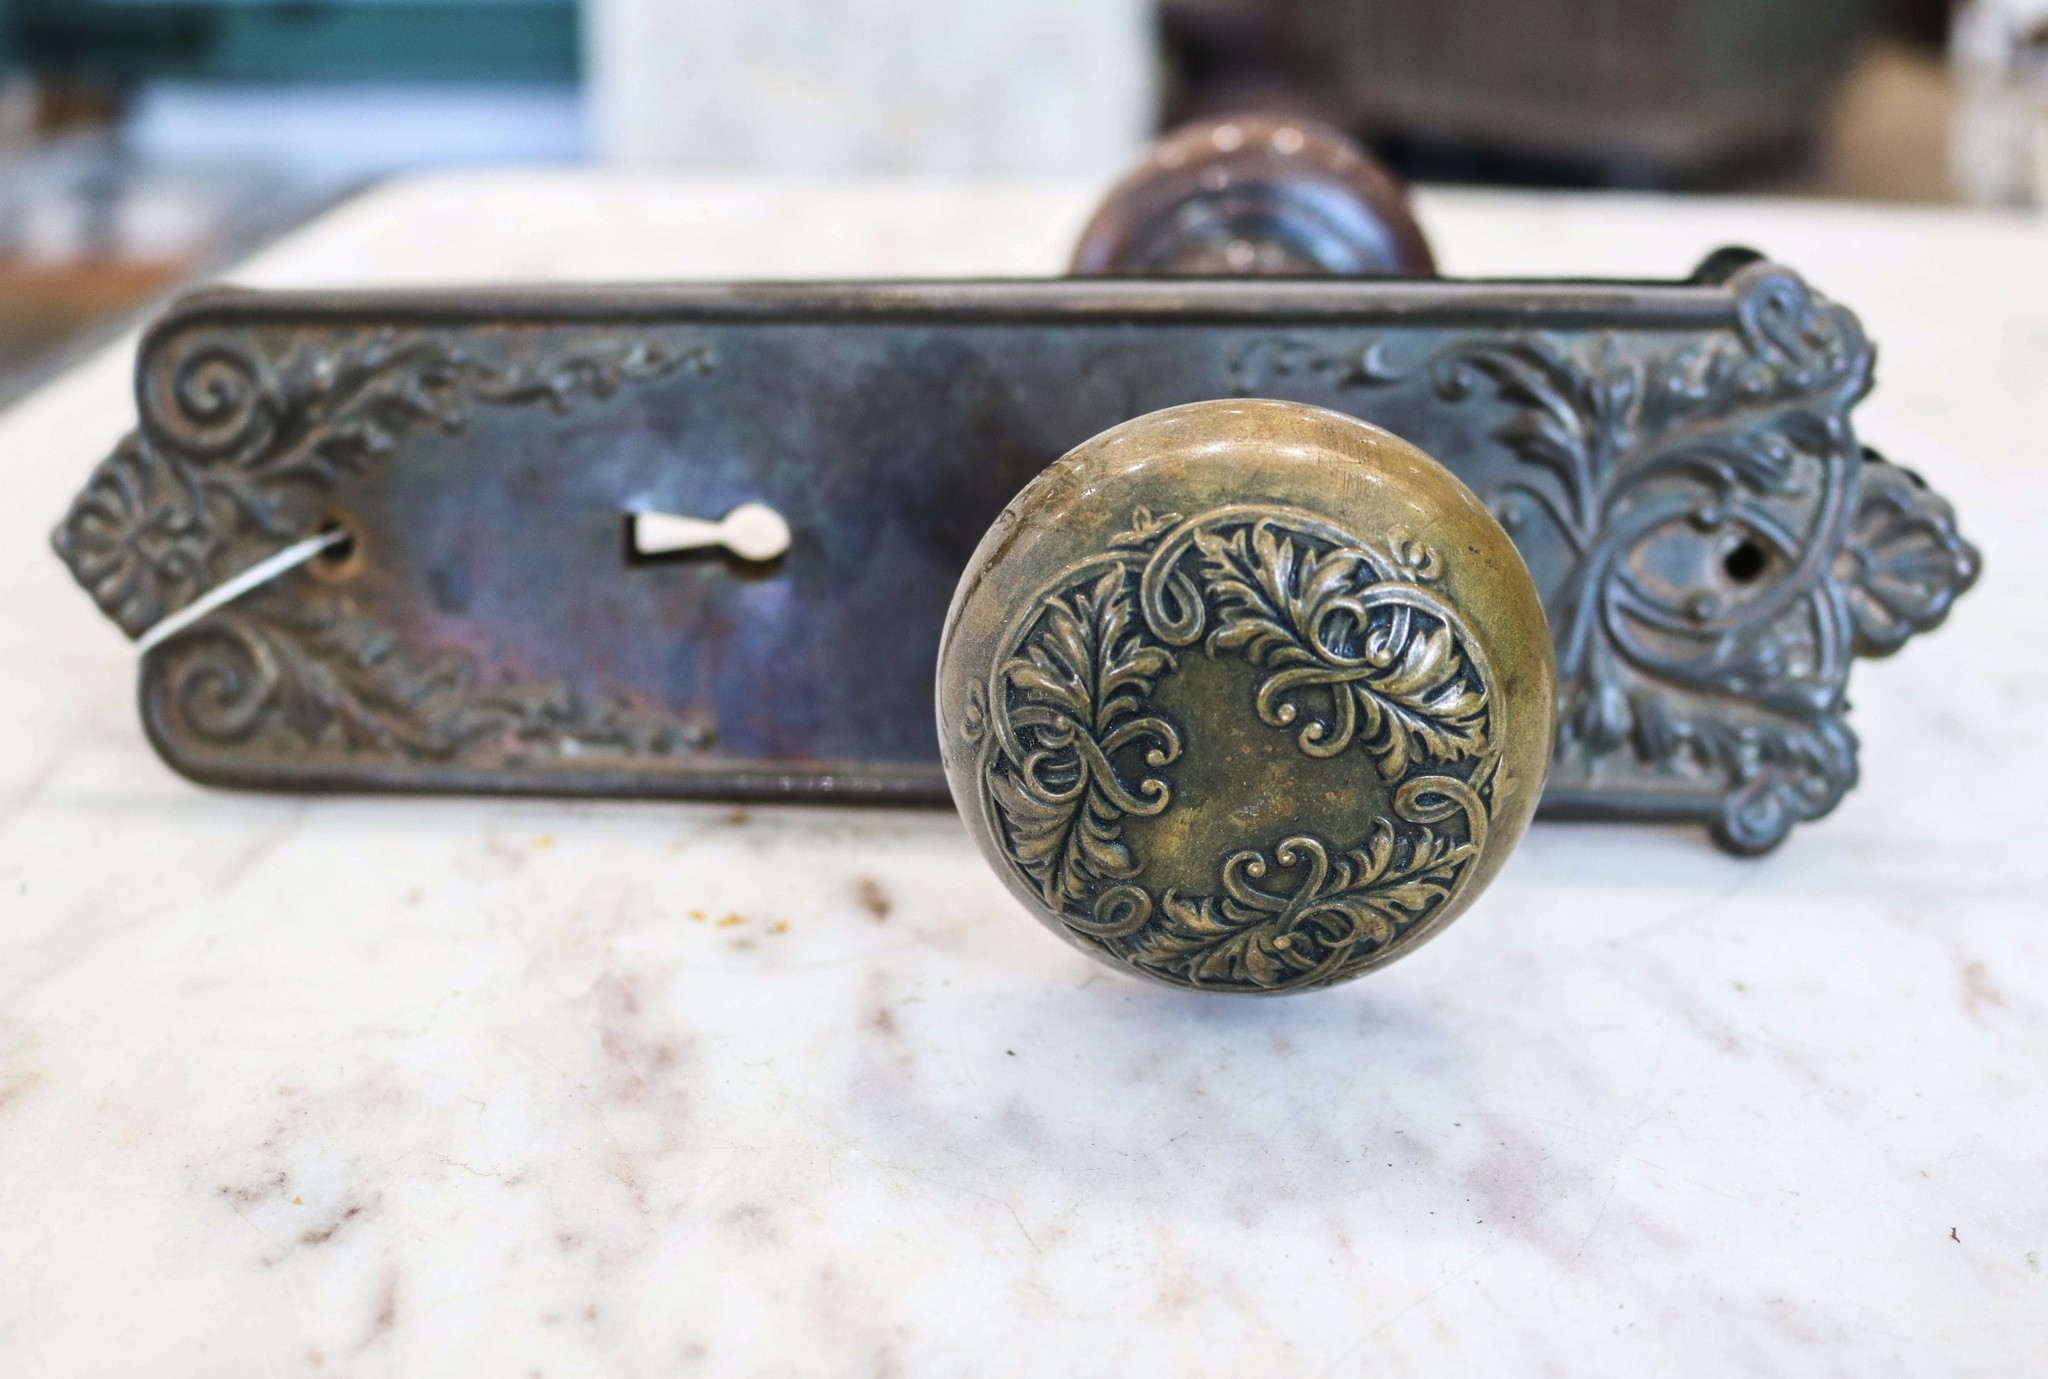 Pair of Brass Art Nouveau Door Knobs with Escutcheons